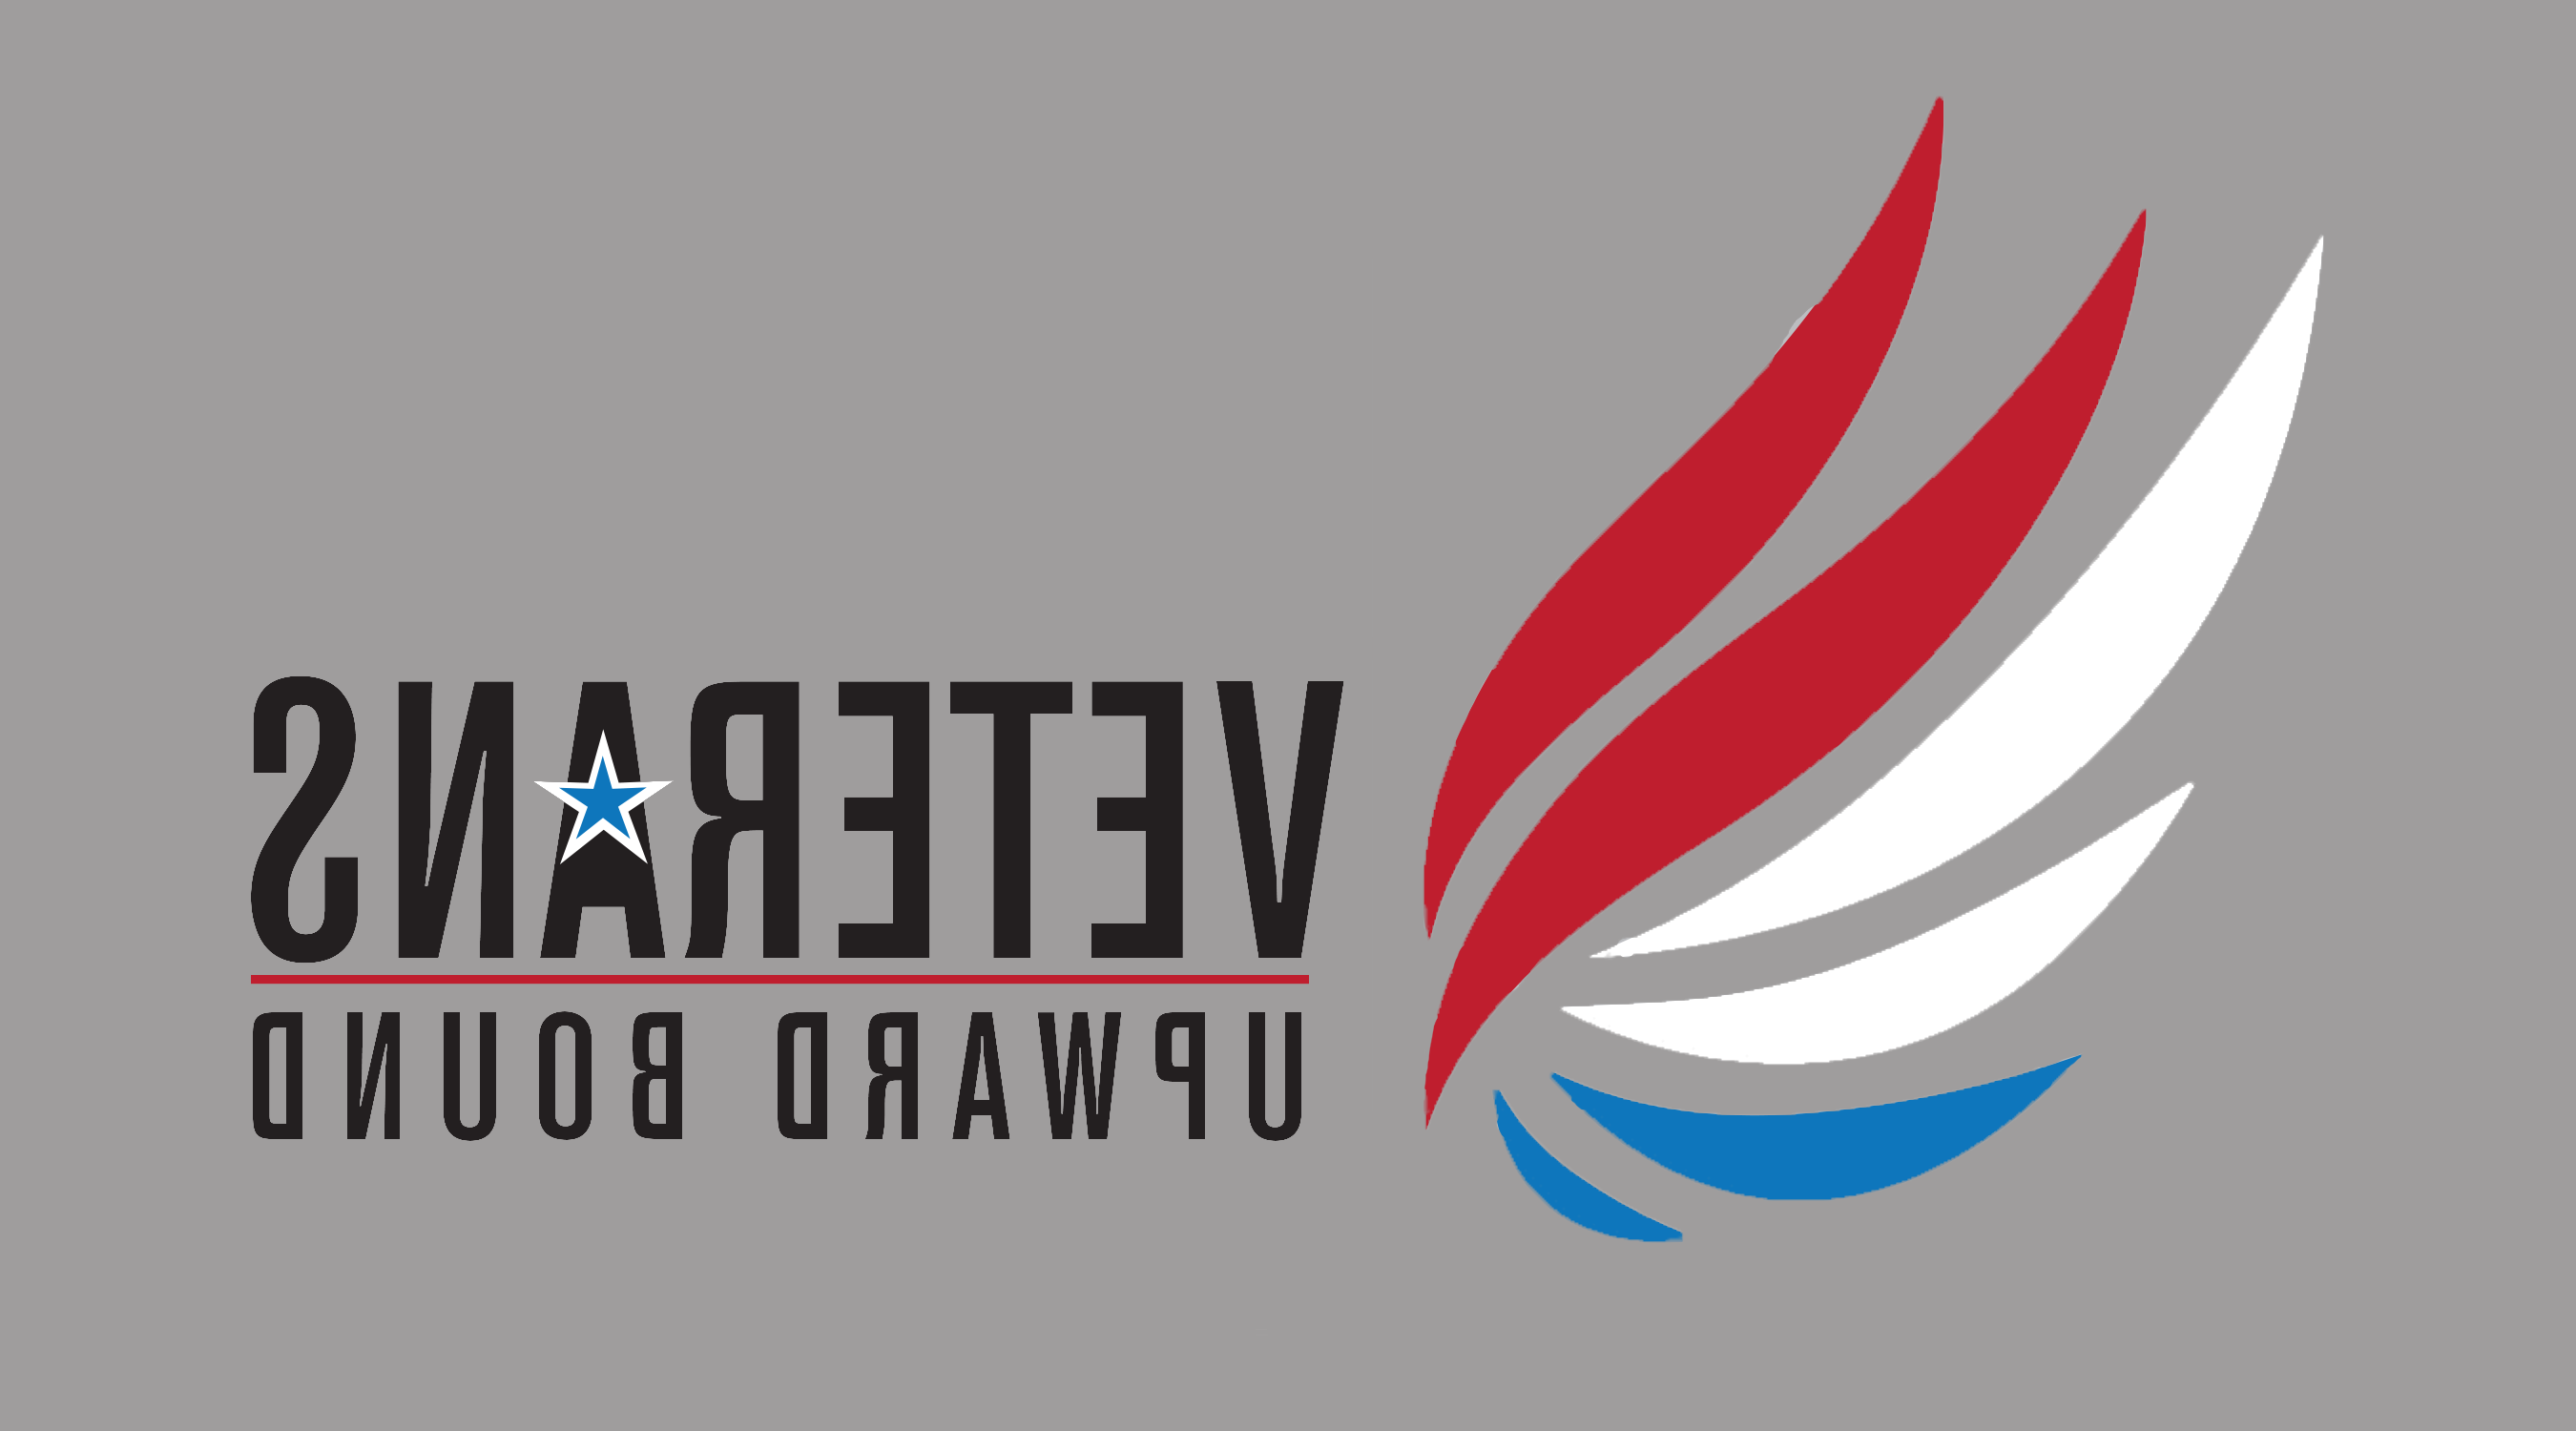 Veterans Upward Bound Logo